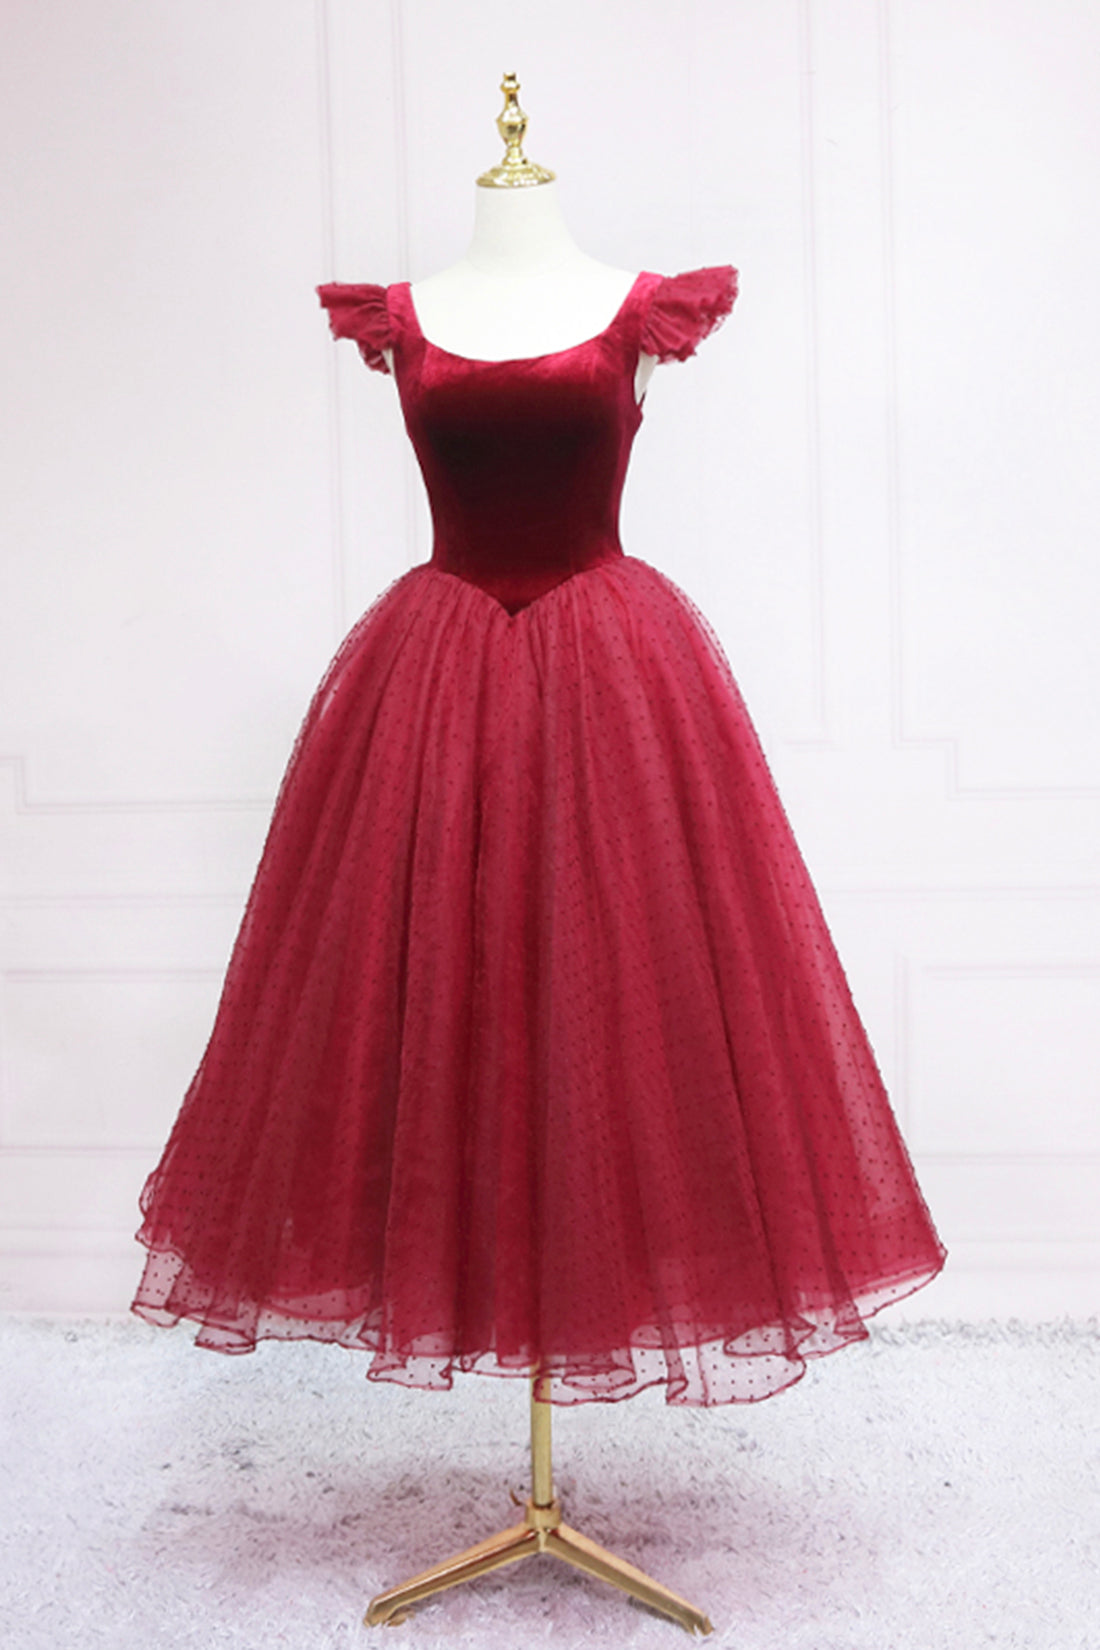 Bridesmaids Dresses Sale, Burgundy Velvet Tulle Tea Length Prom Dress, Cute A-Line Party Dress